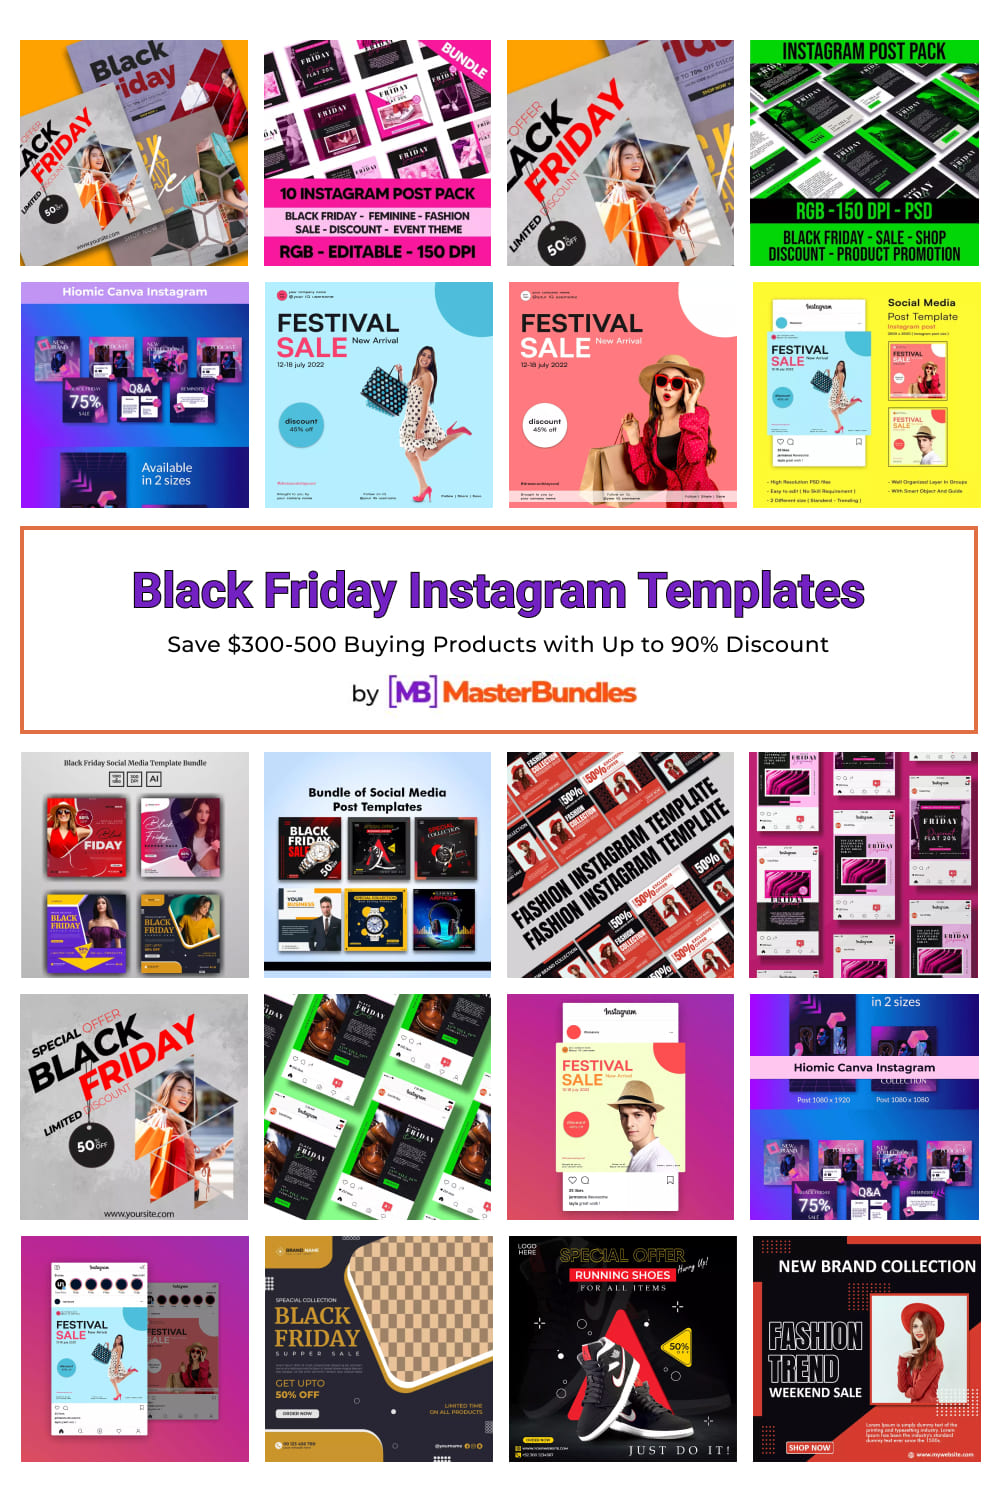 Black Friday Instagram Templates Pinterest image.